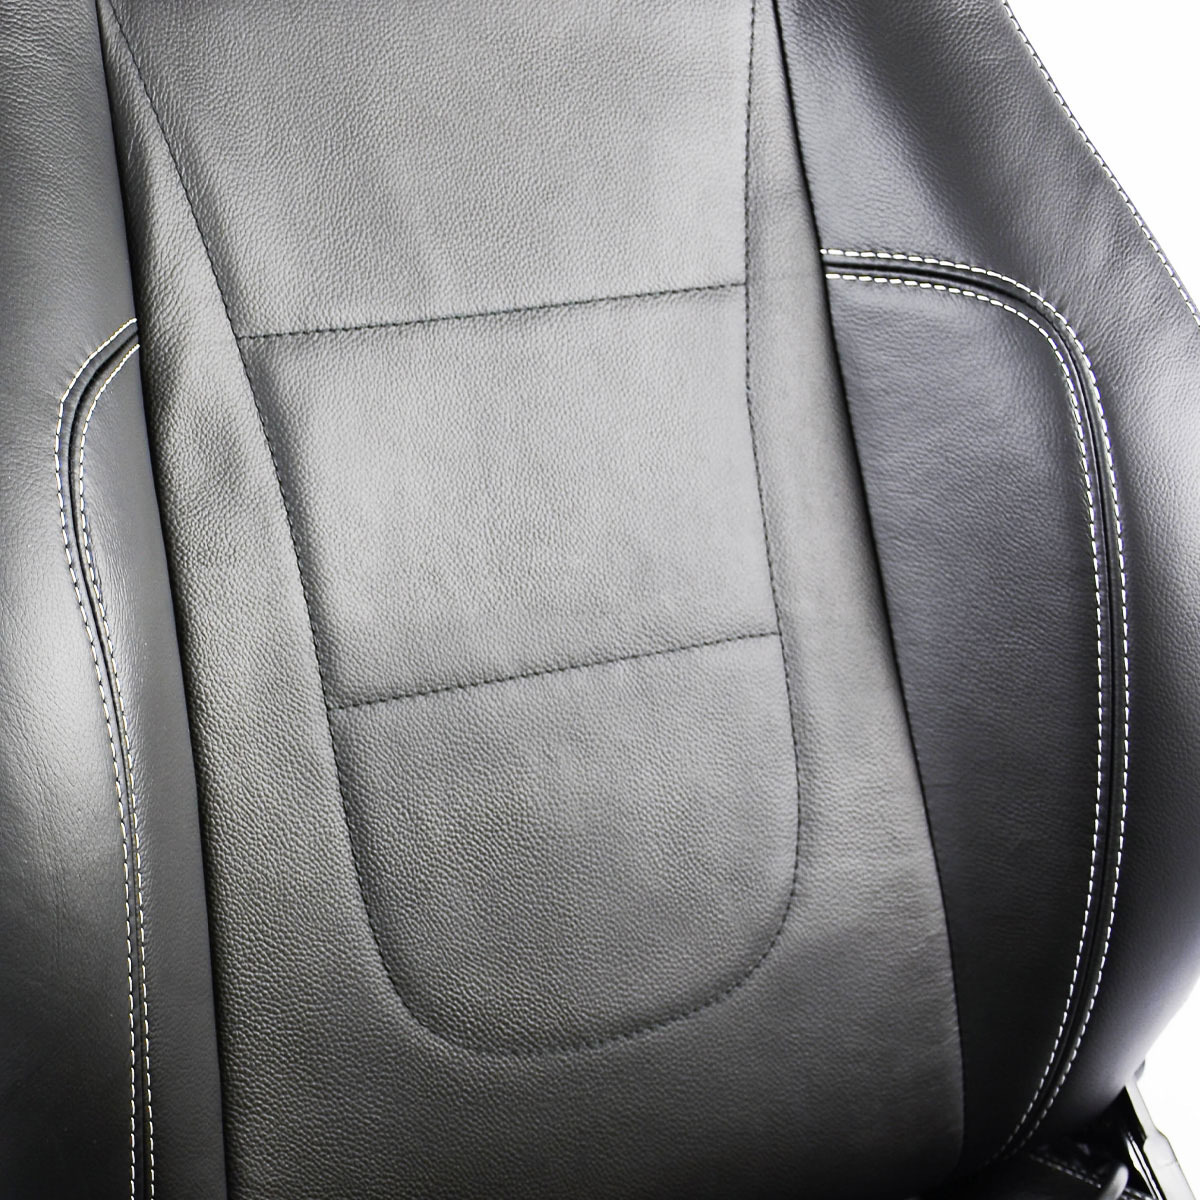 Trax 4x4 Seat Premium Black Leather ADR Compliant